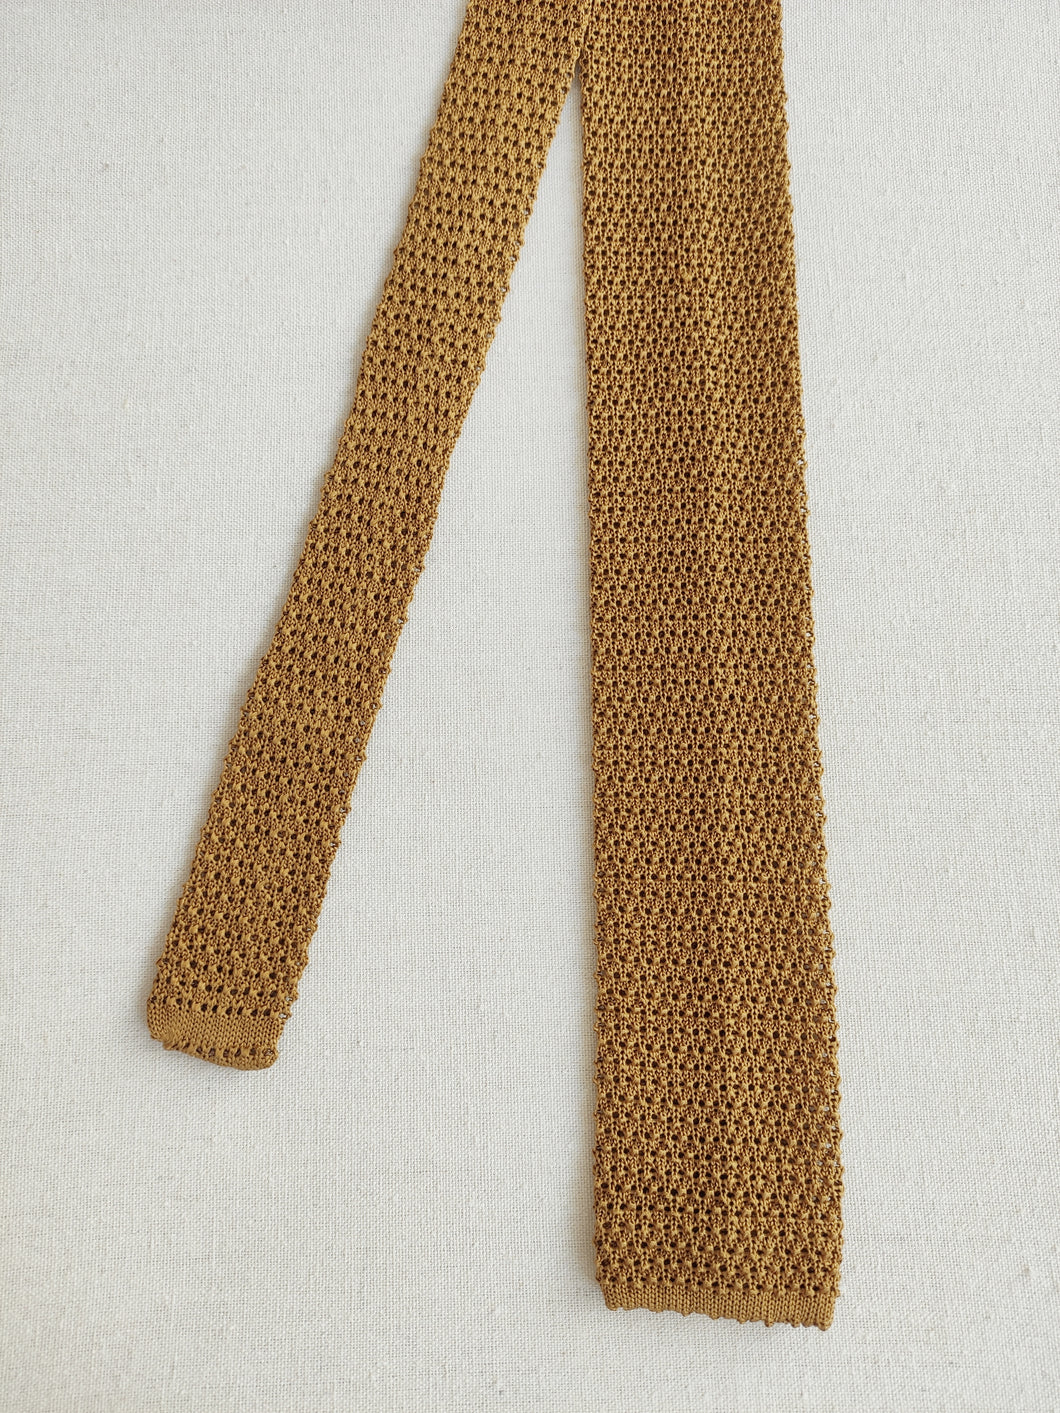 Cravate vintage en tricot de soie moutarde Made in Italy